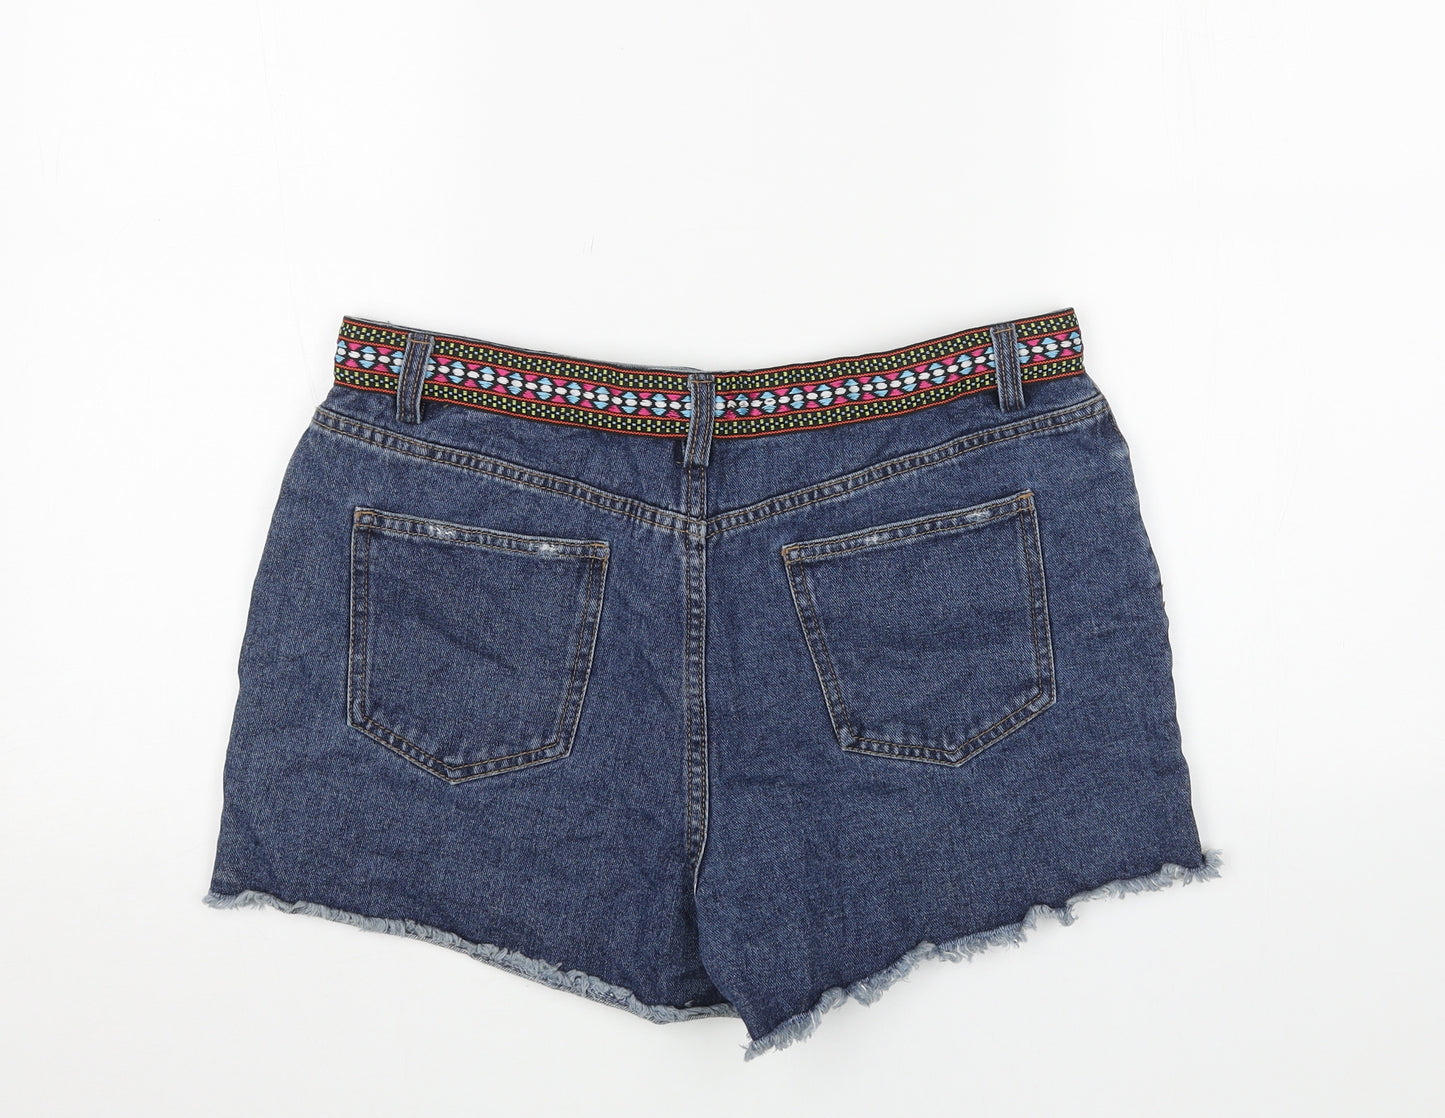 Papaya Womens Blue Cotton Hot Pants Shorts Size 12 Regular Button